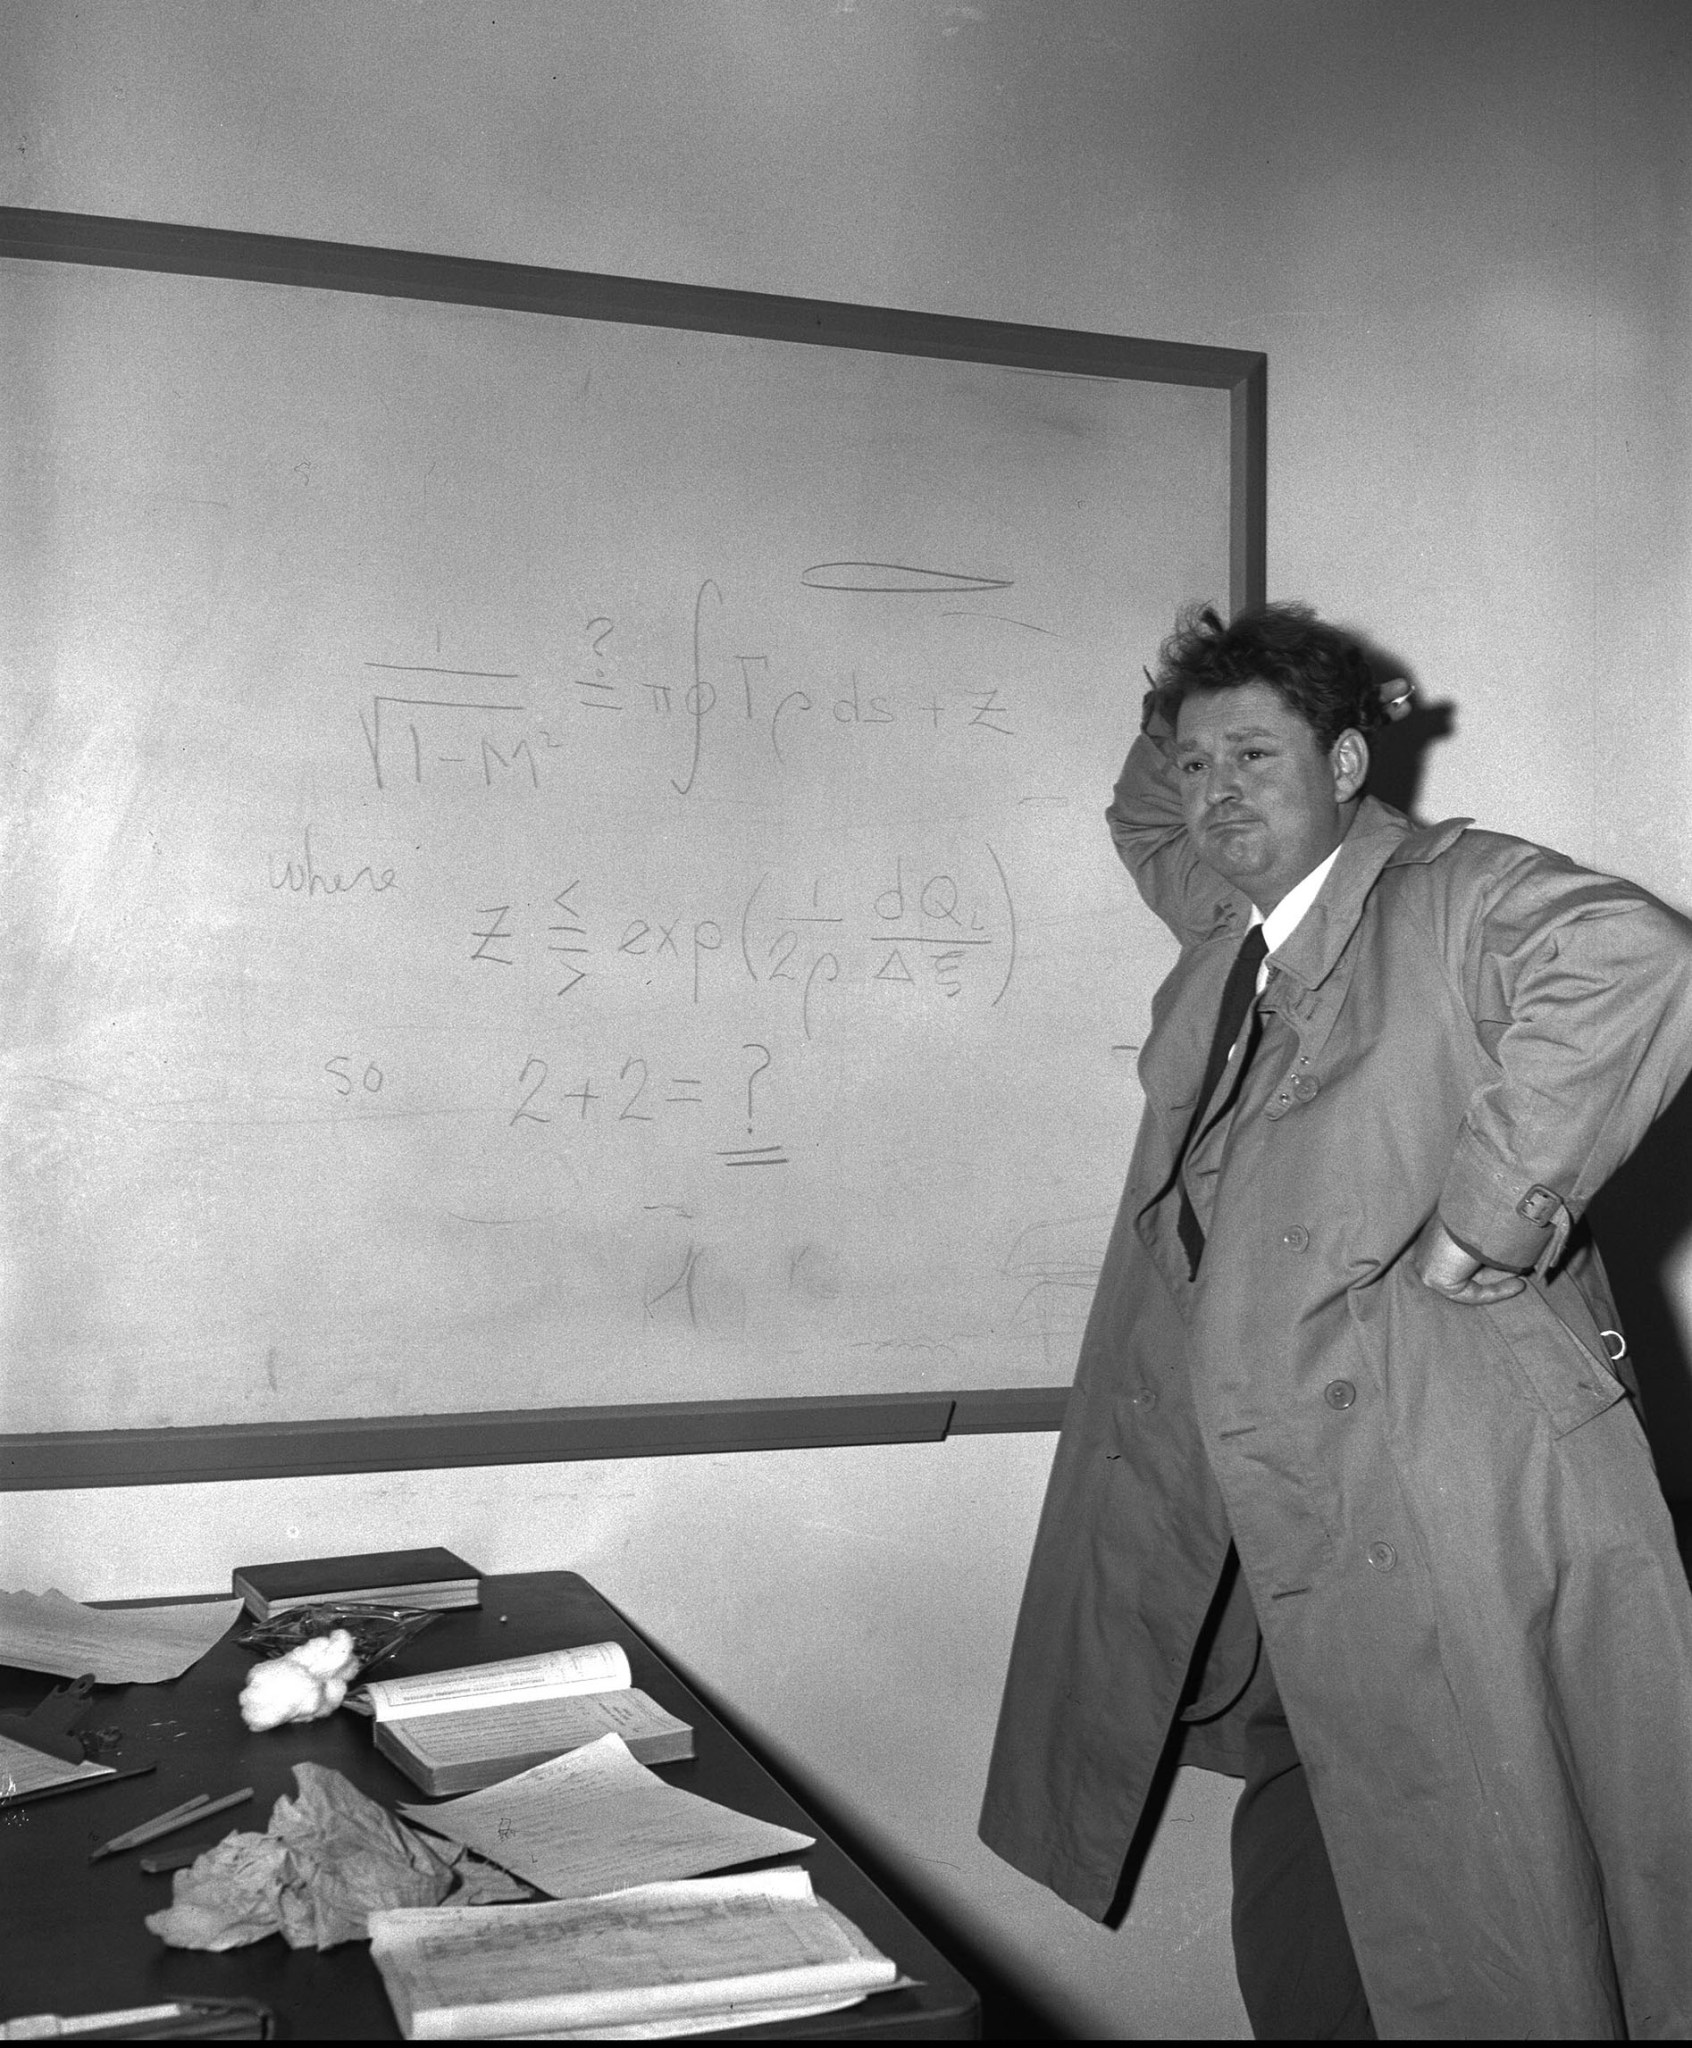 H. Julian Allen standing at a blackboard at Ames Research Center, Apr. 08 1968.